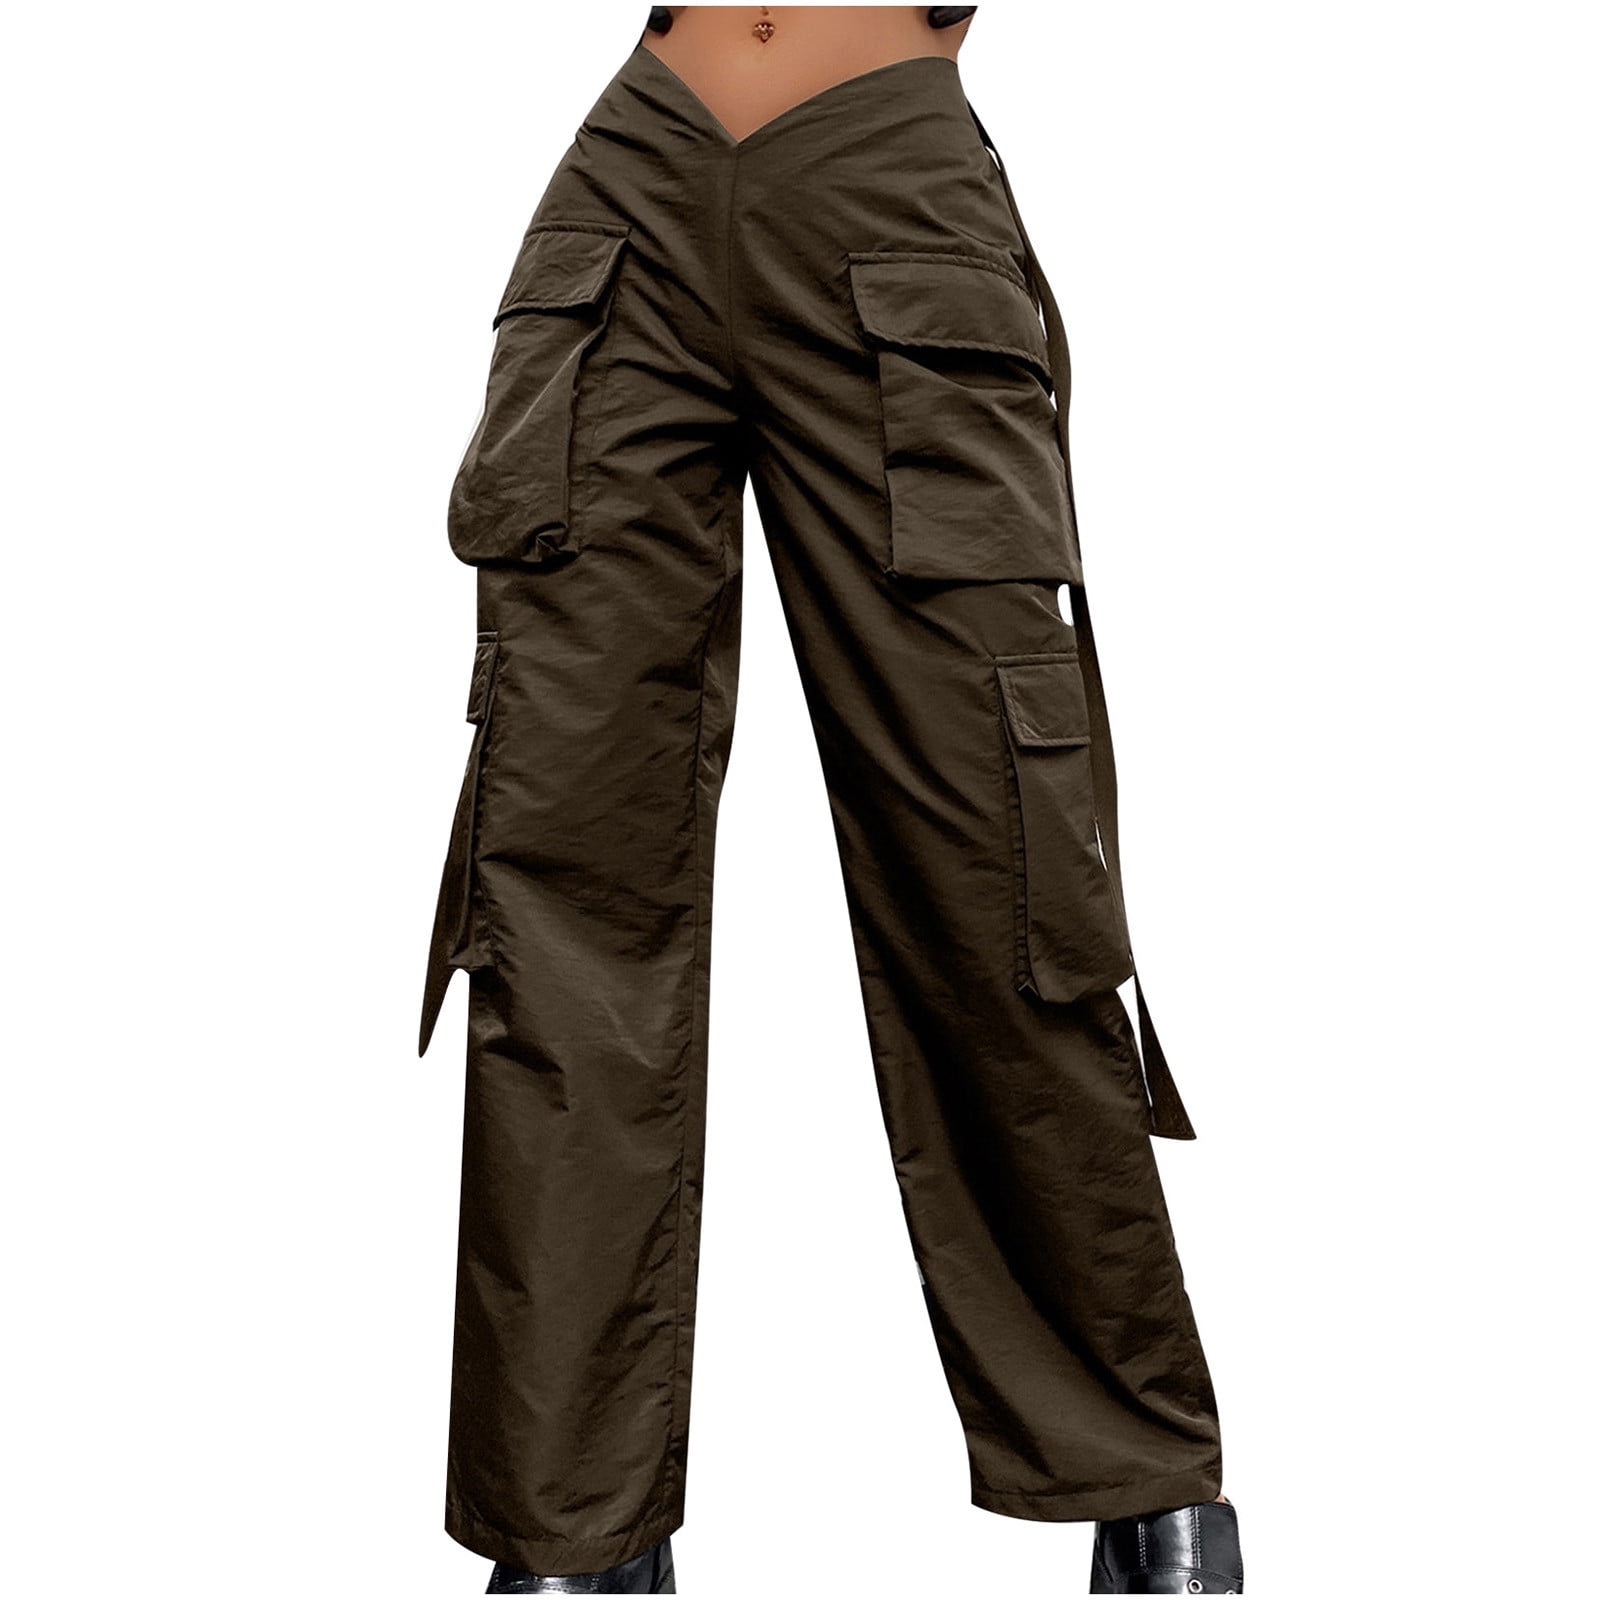 Mrat Work Pants for Women Full Length Pants Ladies Street Style